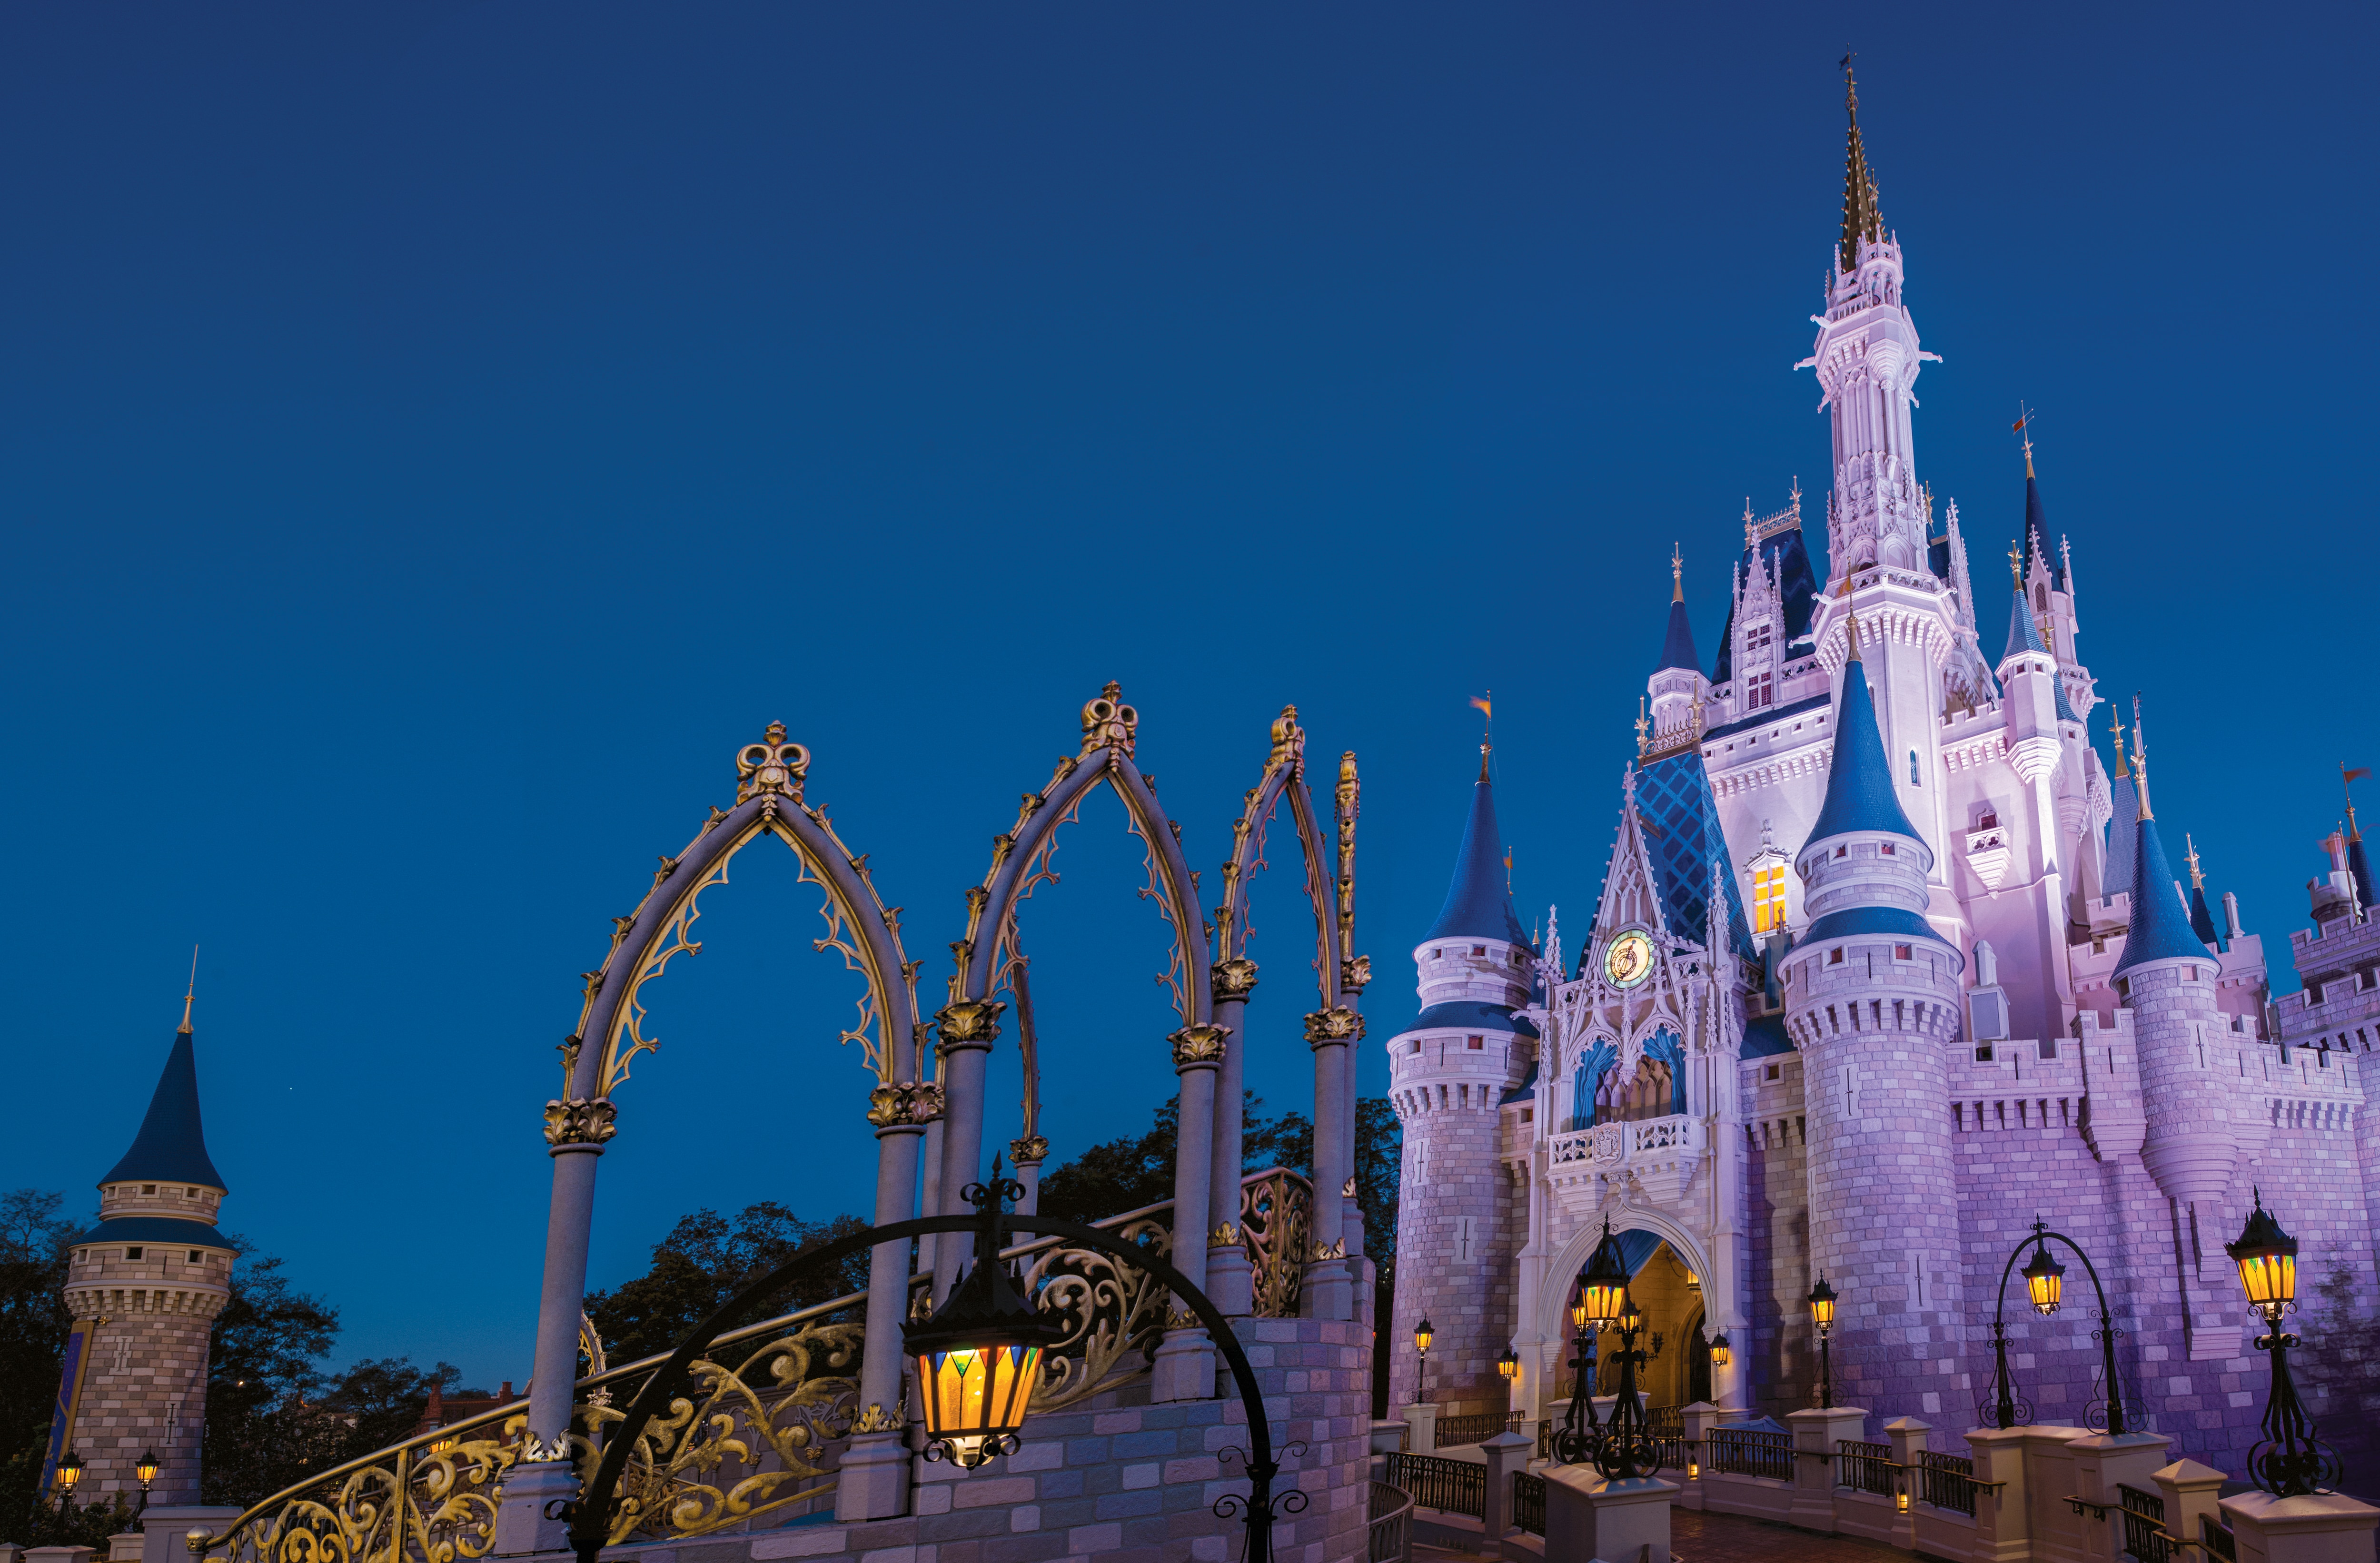 Magic Kingdom's Cinderella Castle at dusk